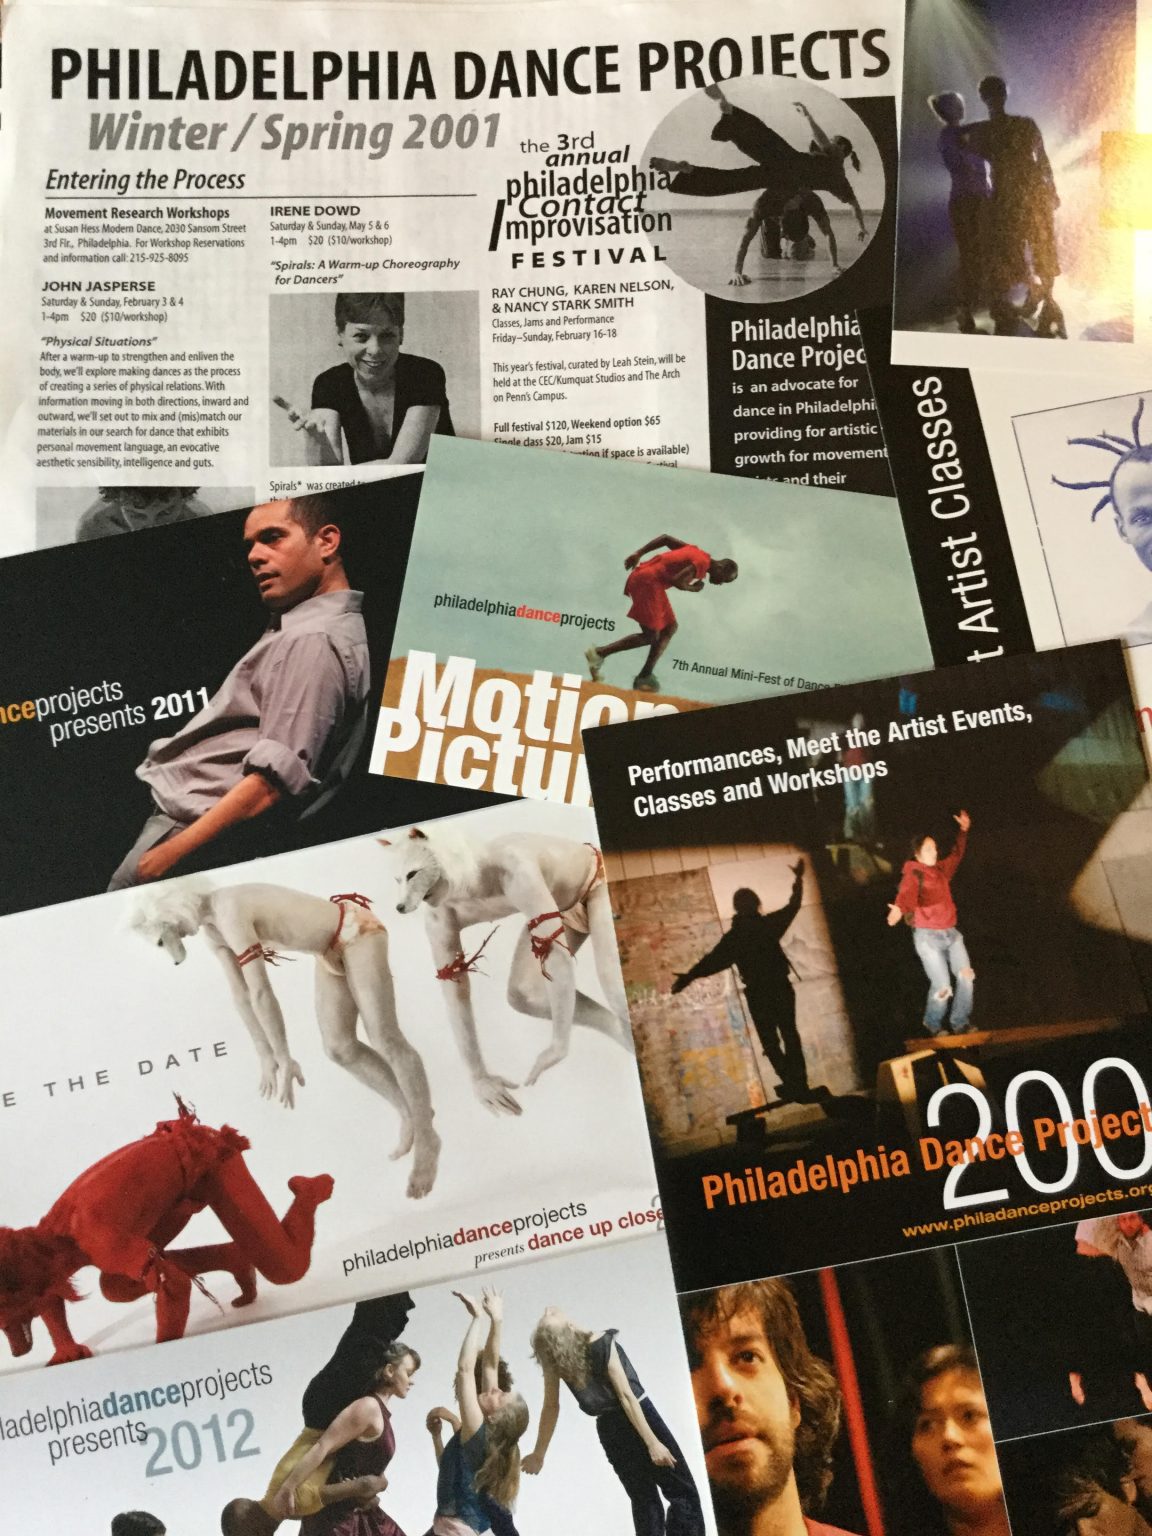 flyers of dance performances in philadelphia produced by philadelphia dance projects